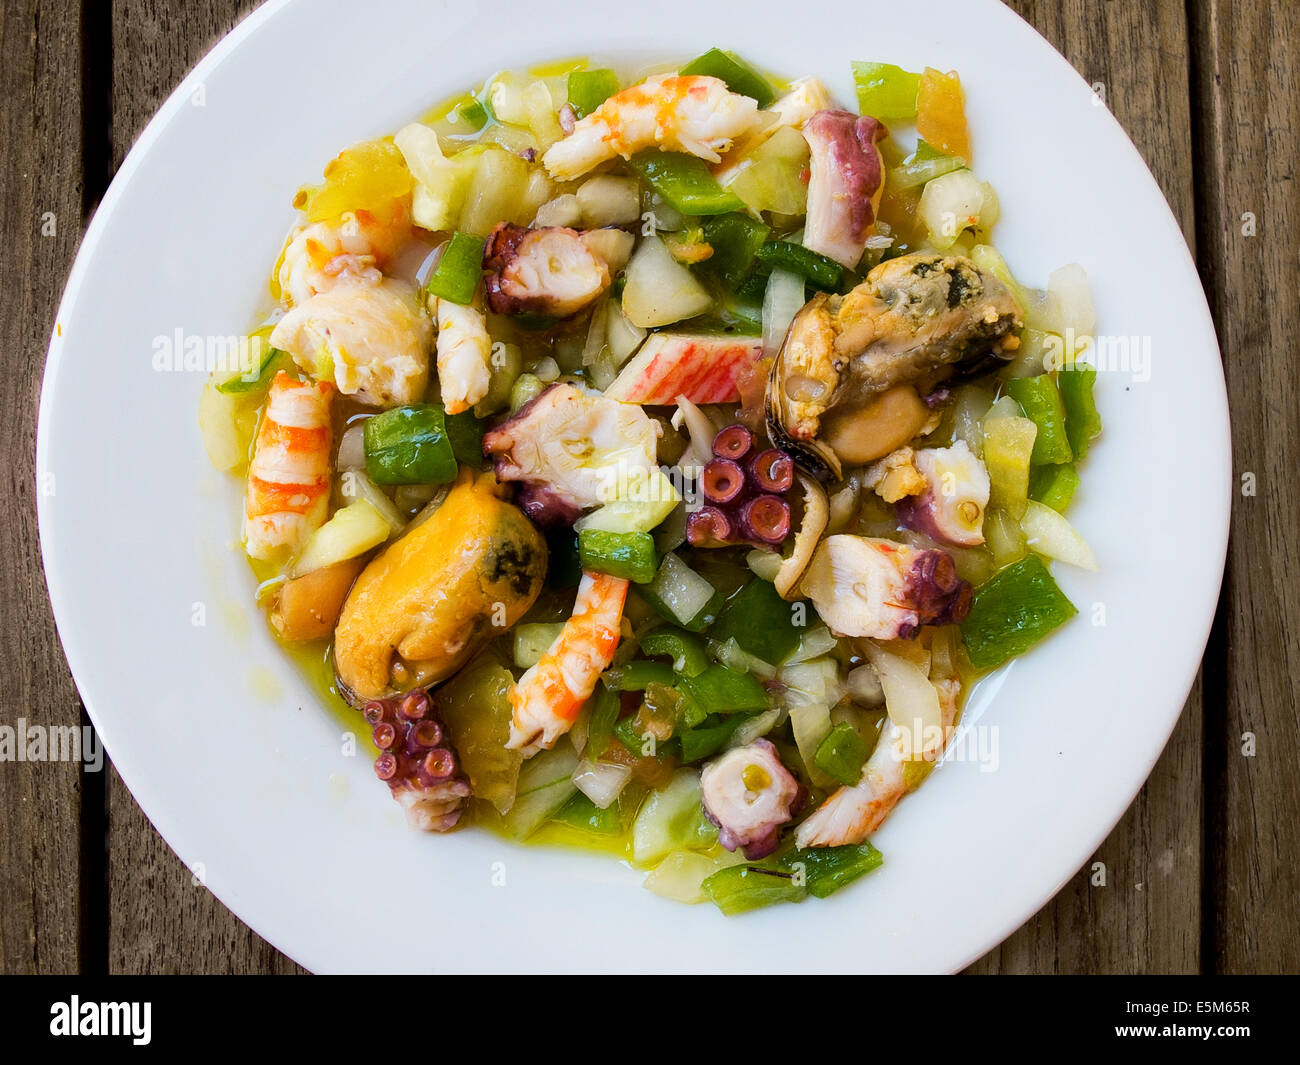 Salpicon de fruits de mer / Crustacés salade. Tapa typiquement espagnol. Banque D'Images